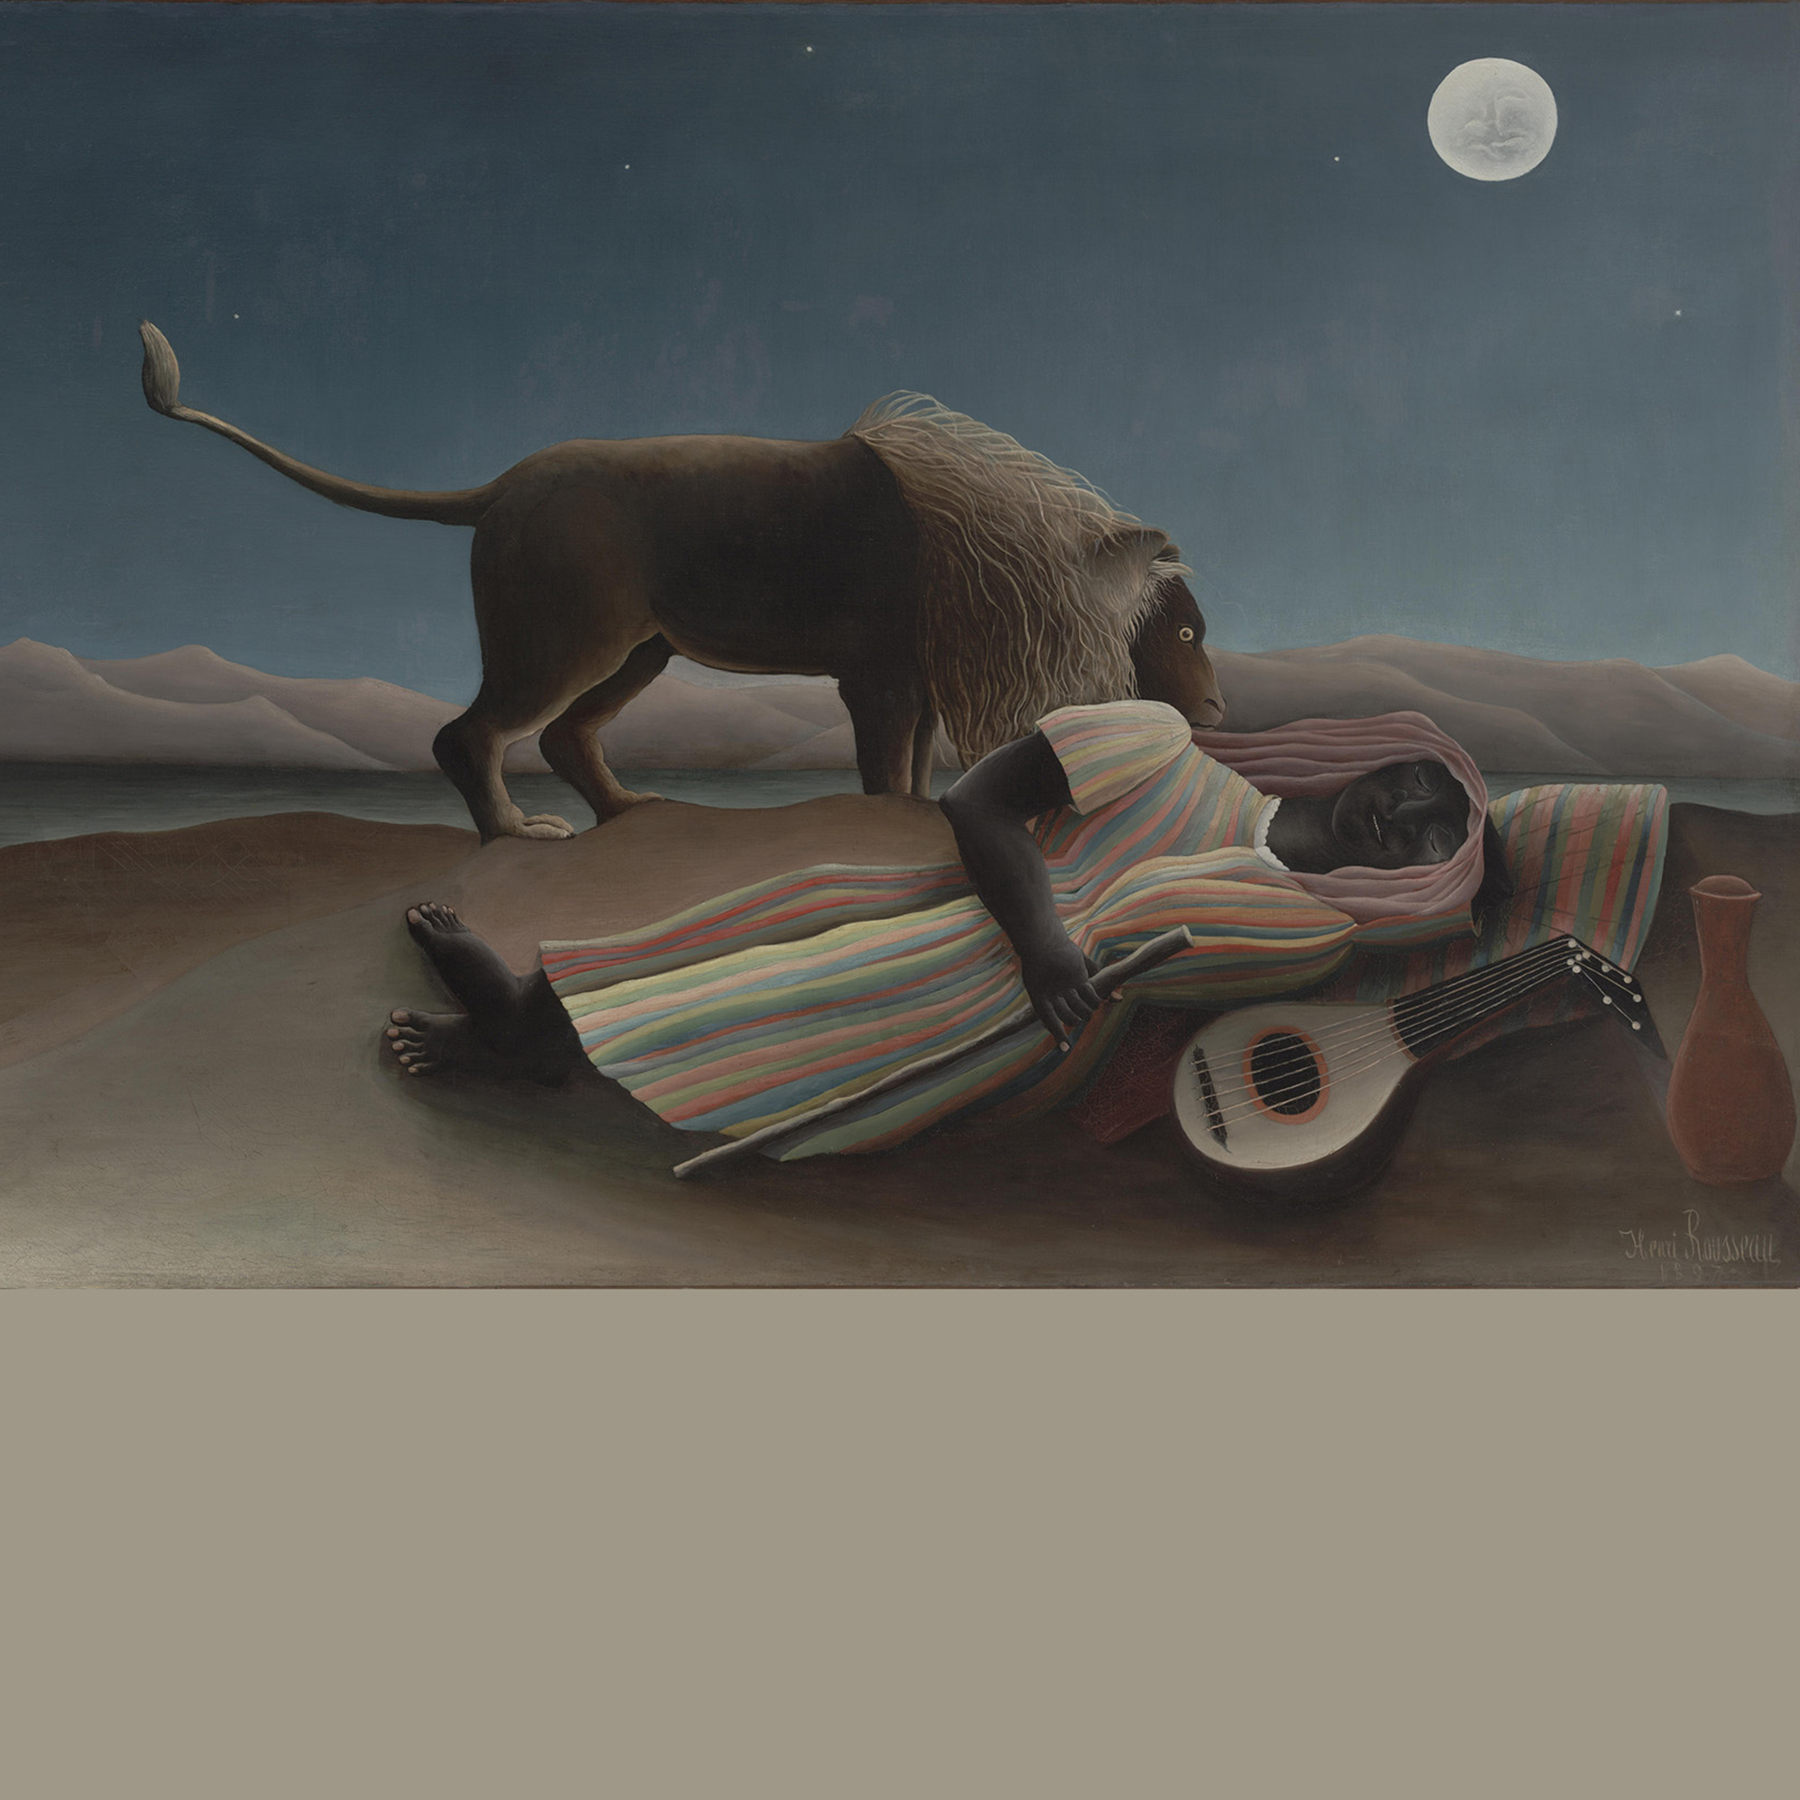 The Sleeping Gypsy (La Bohémienne endormie) (1897) by H Rousseau